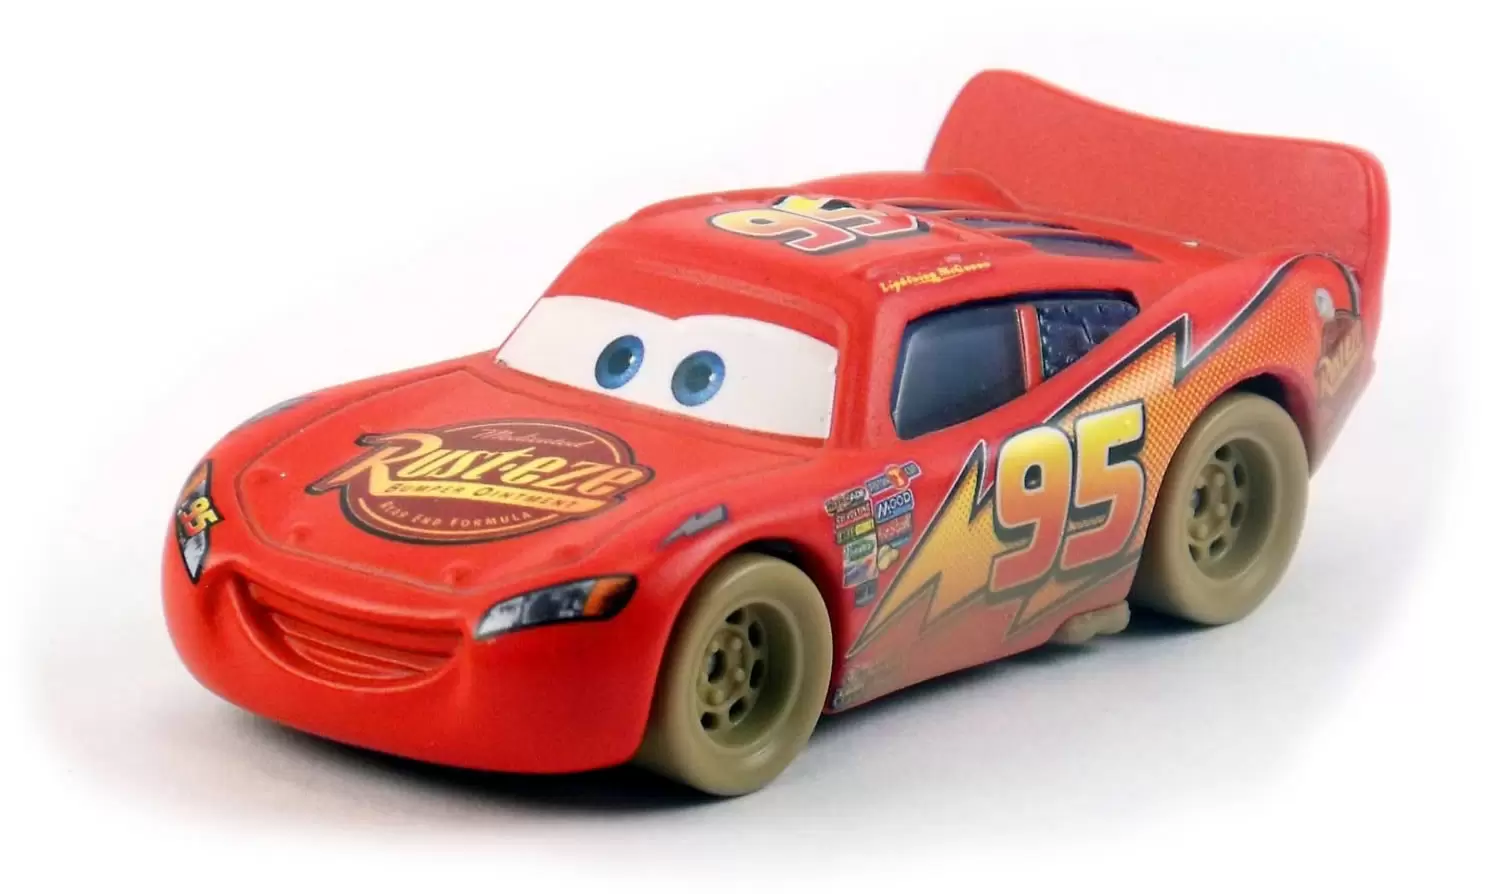 Cars 1 models - Dirt Track McQueen